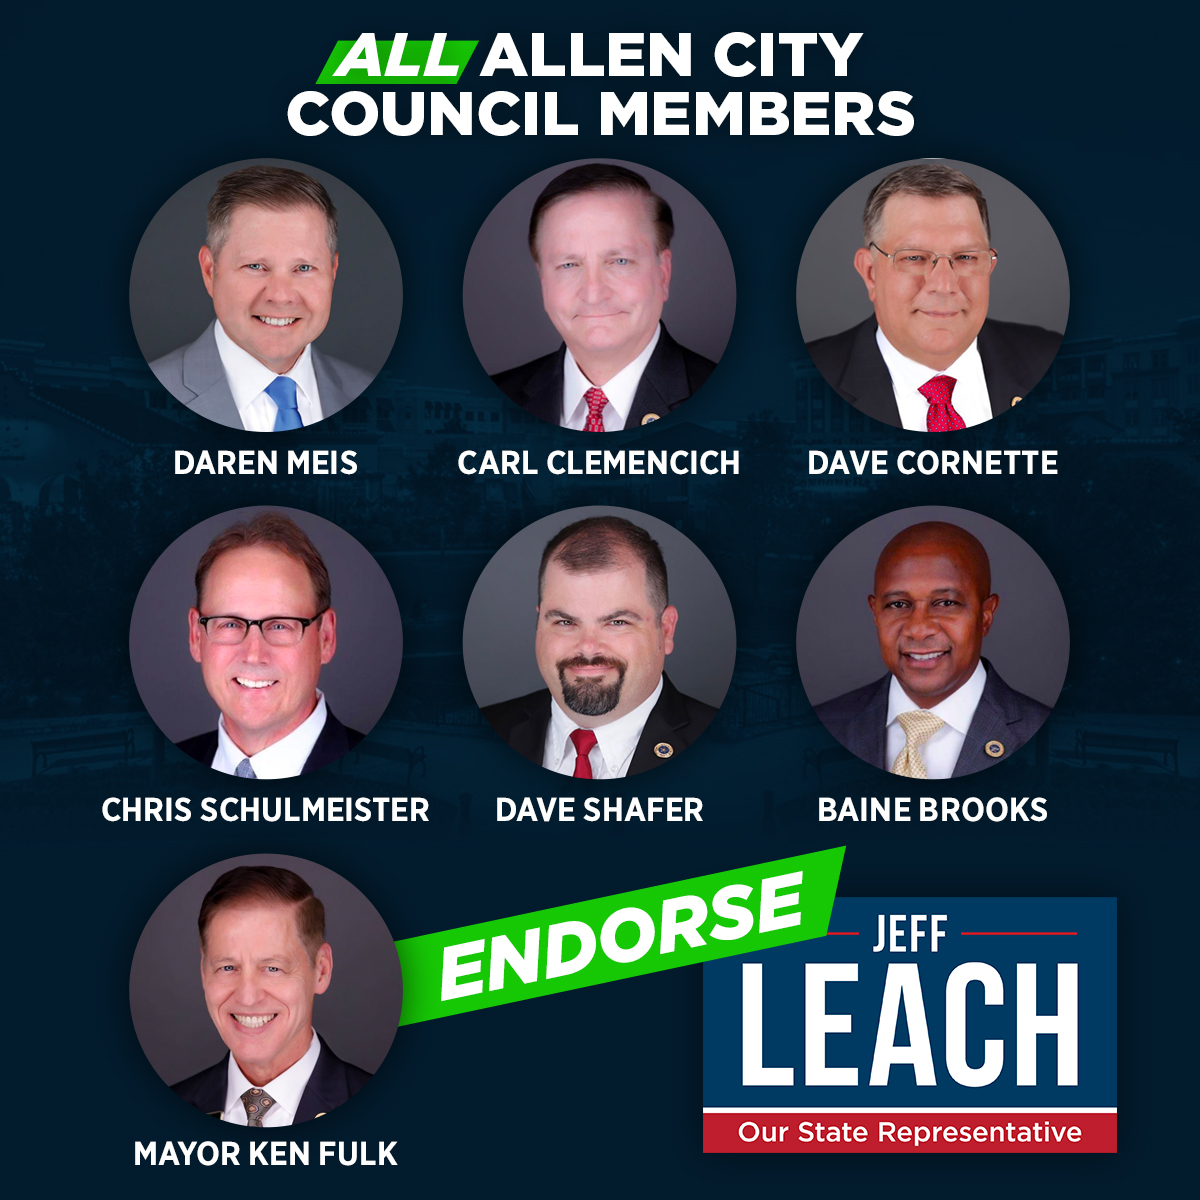 Collin County Commissioners Court Endorses Rep. Leach!